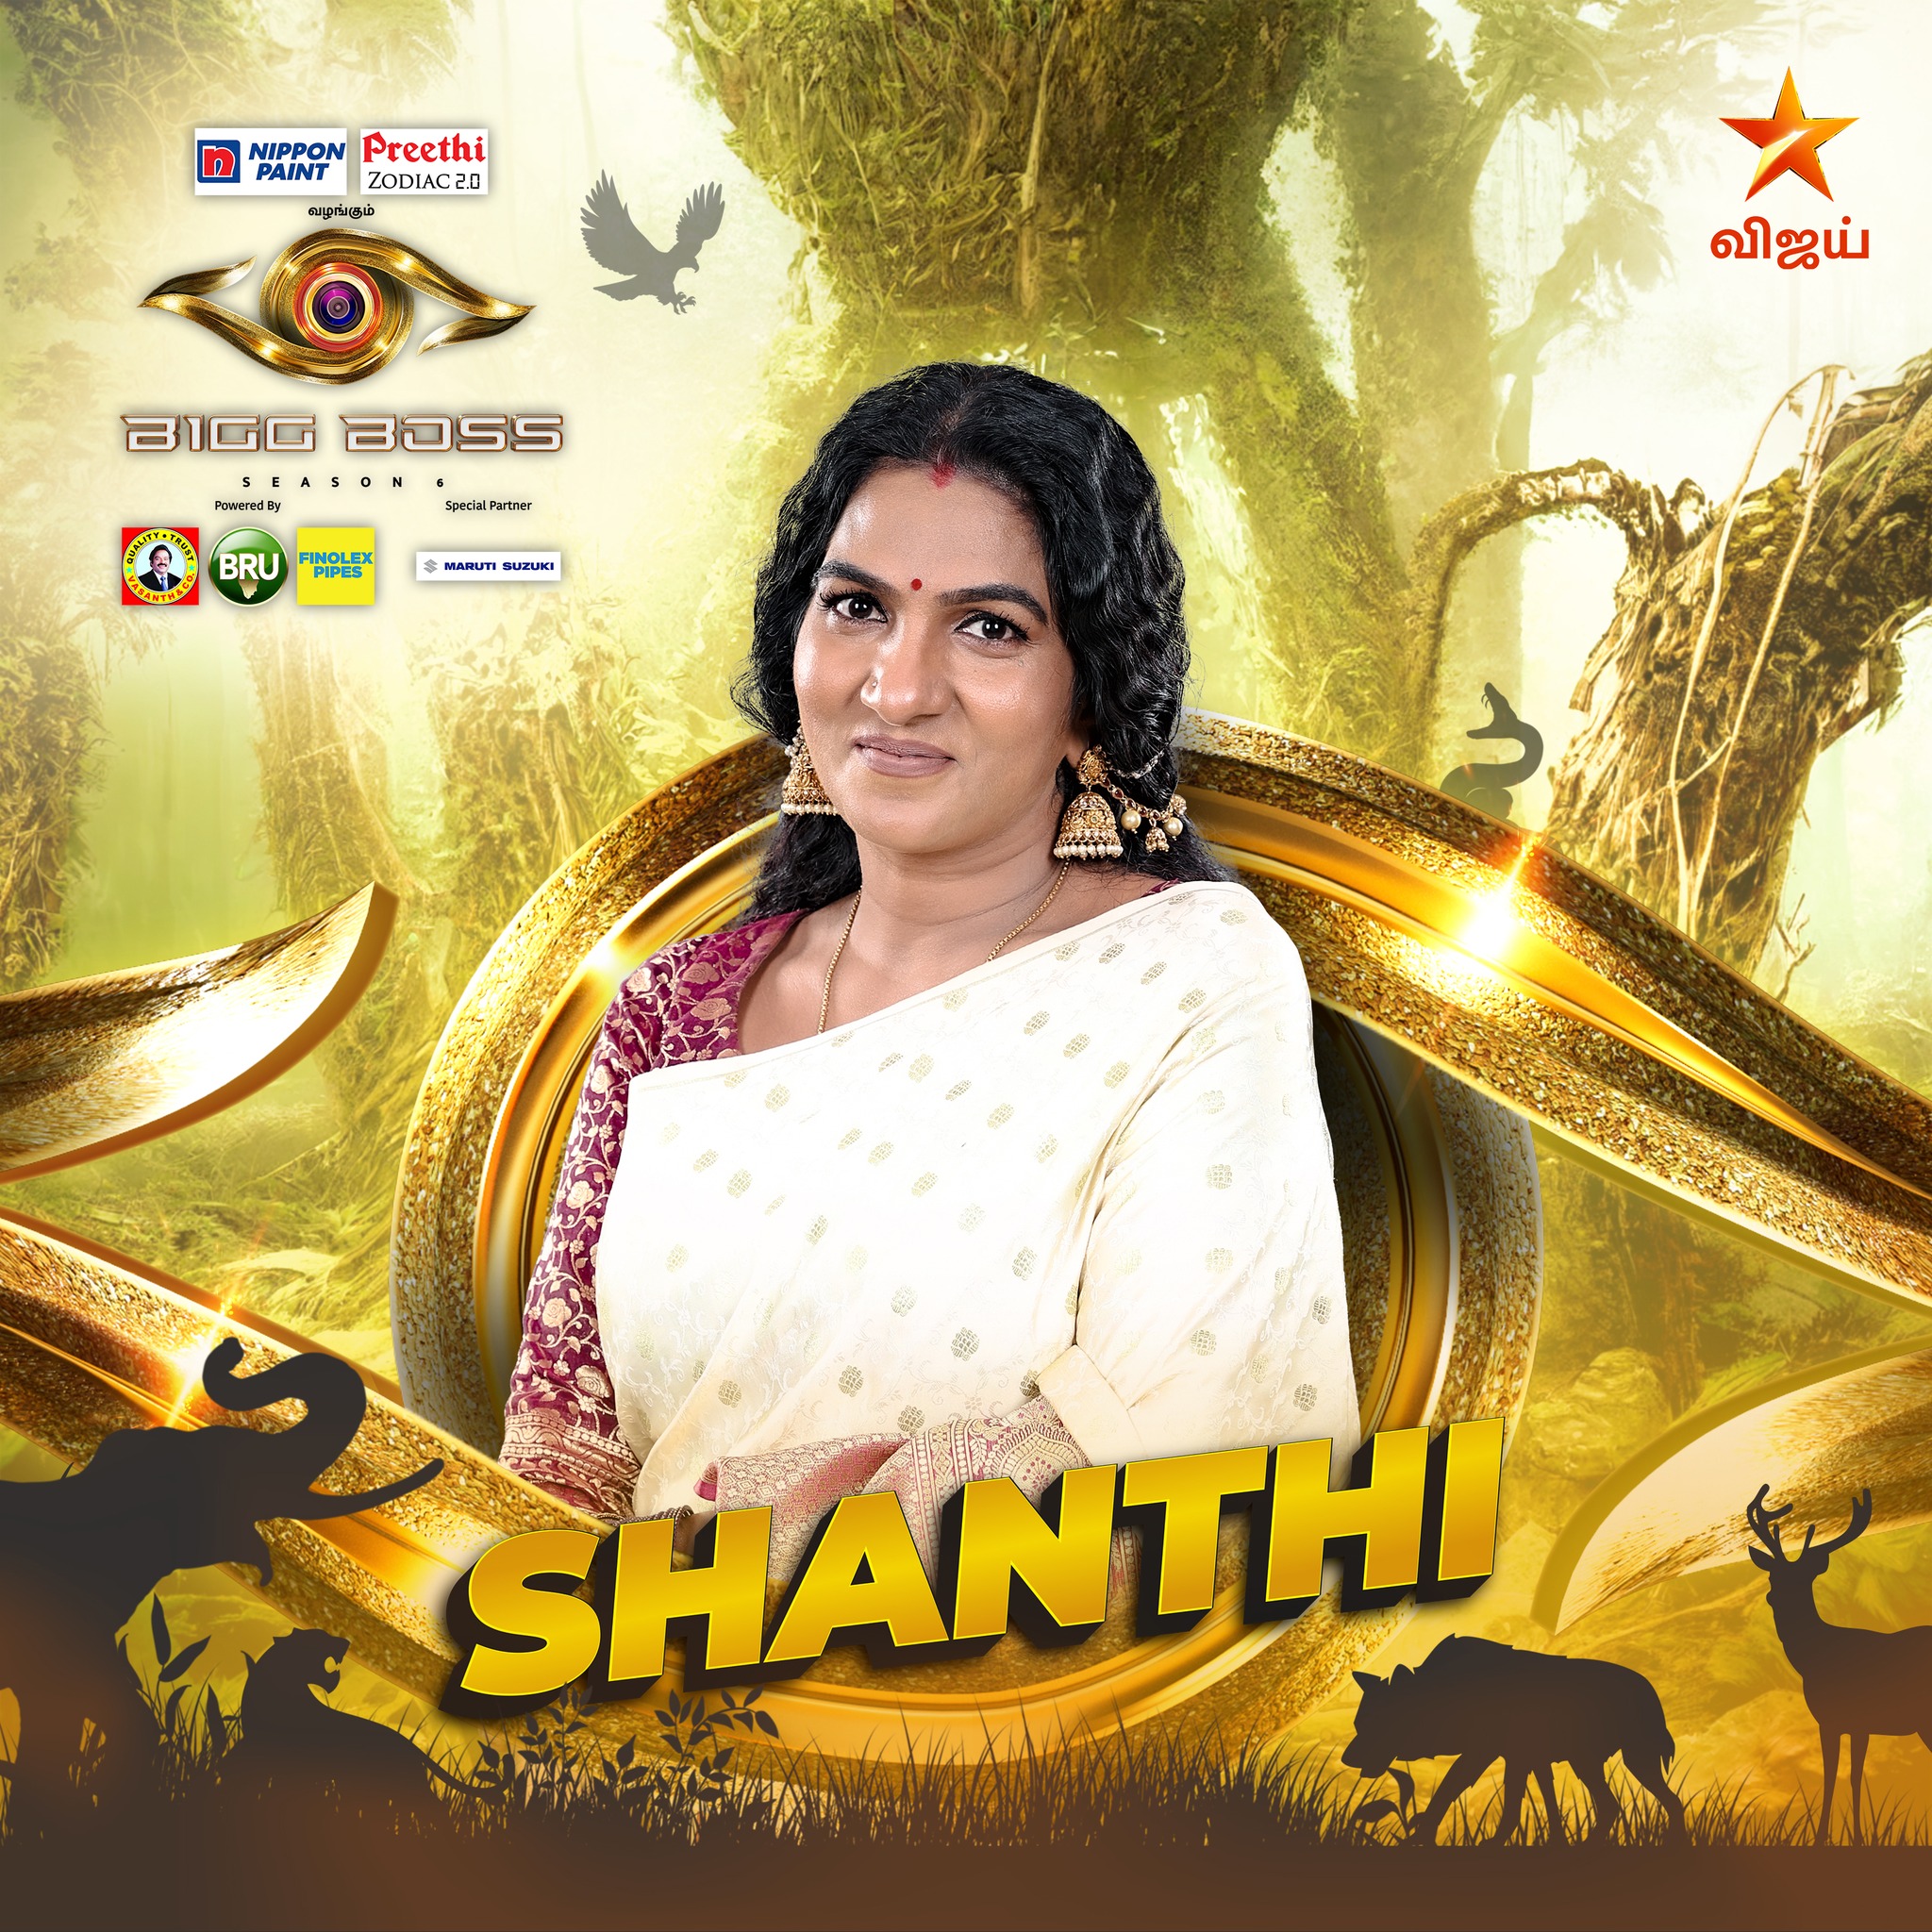 Shanthi Season 6 bigg boss tamil contestant